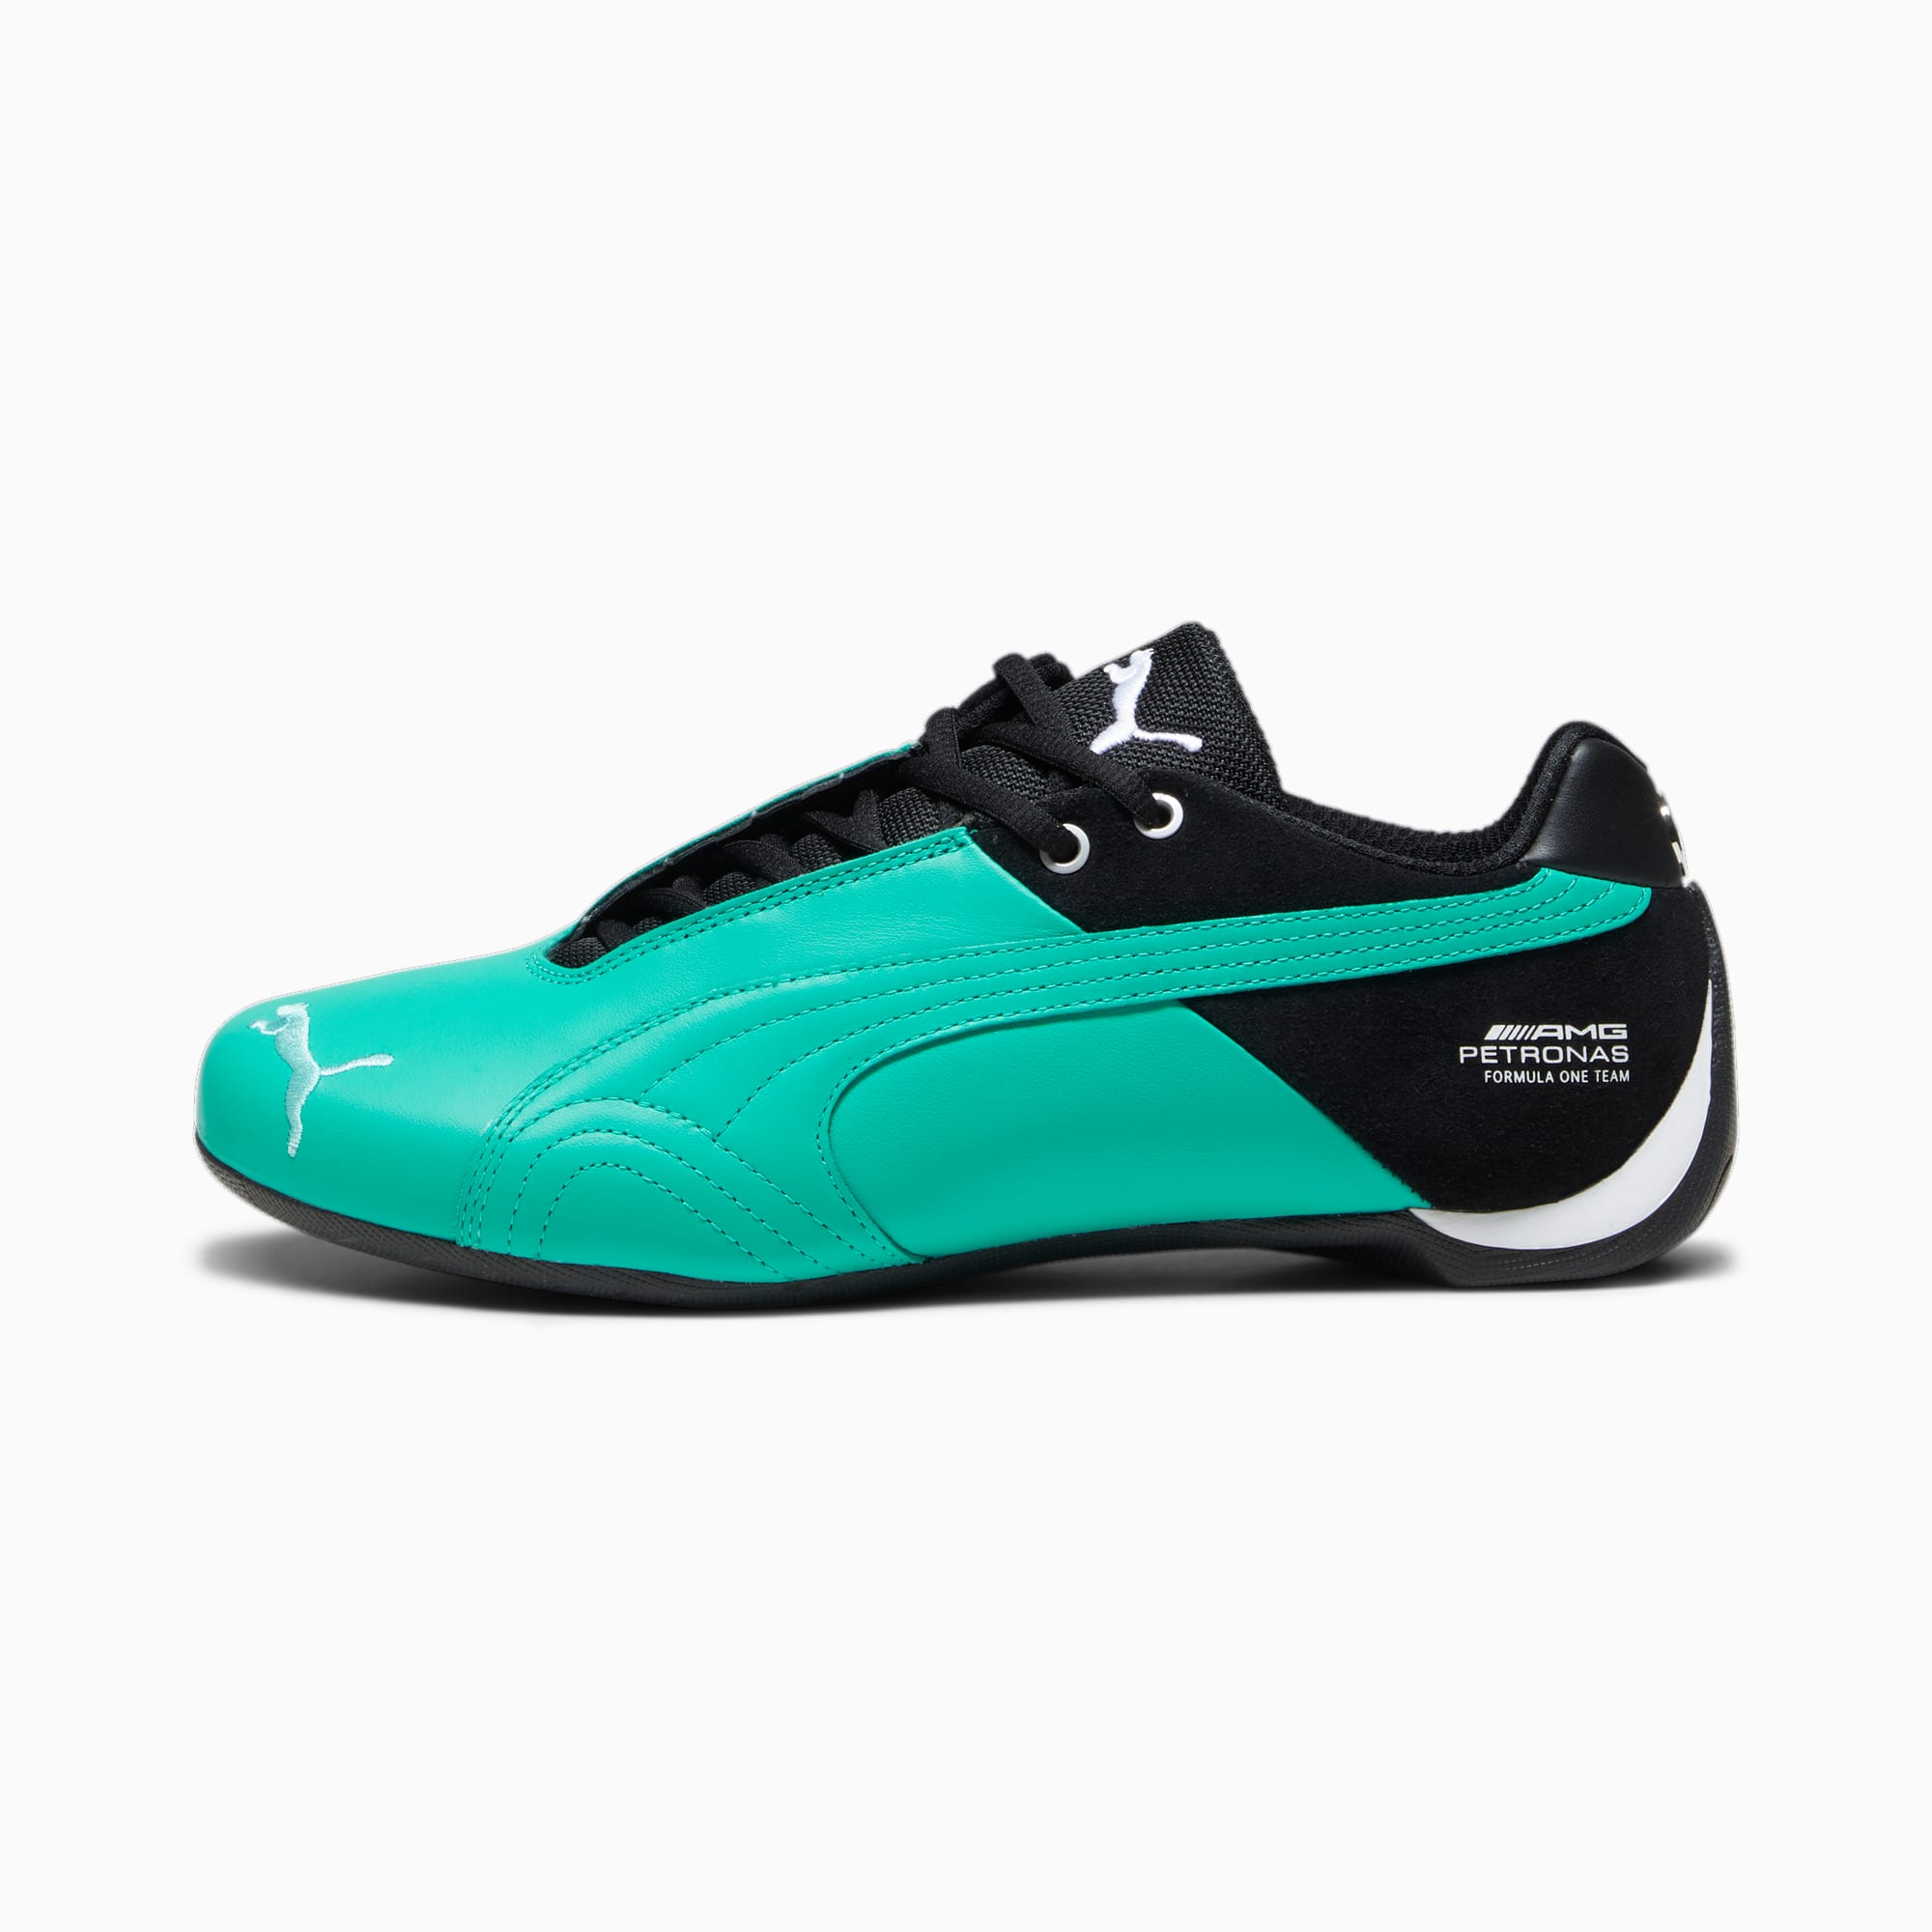 Buy Mercedes-AMG Petronas Formula 1 Rider FV Sneakers Men's Footwear from  Puma. Find Puma fashion & more at